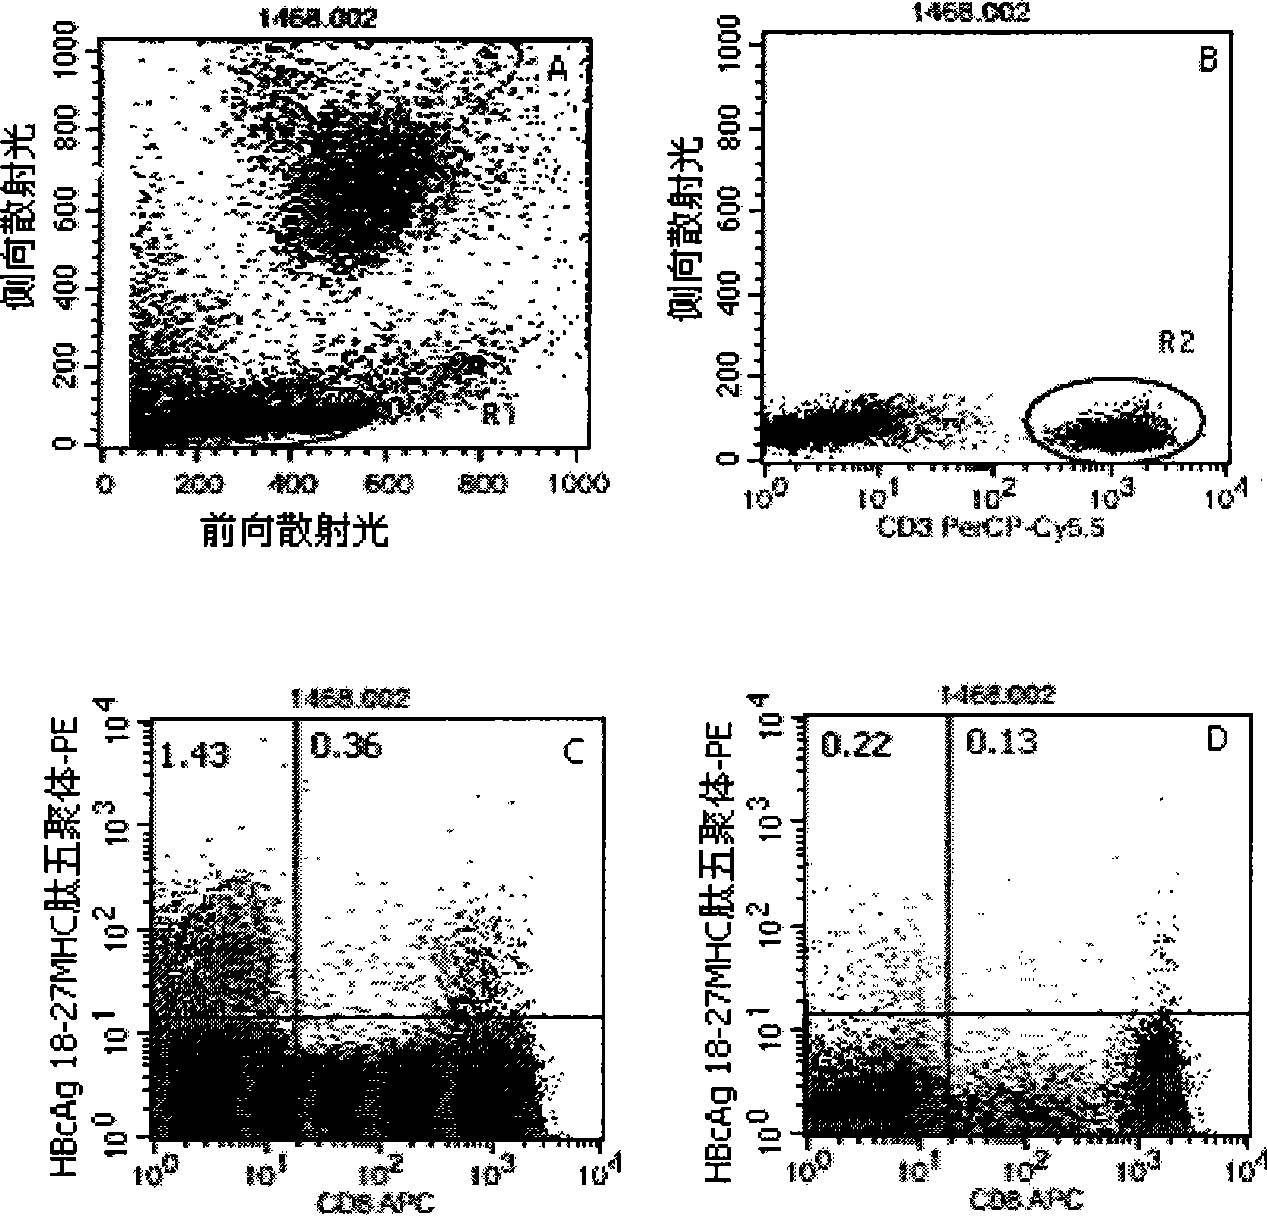 Quantitative determination method for hepatitis b virus specificity cell toxicity T lymphocyte